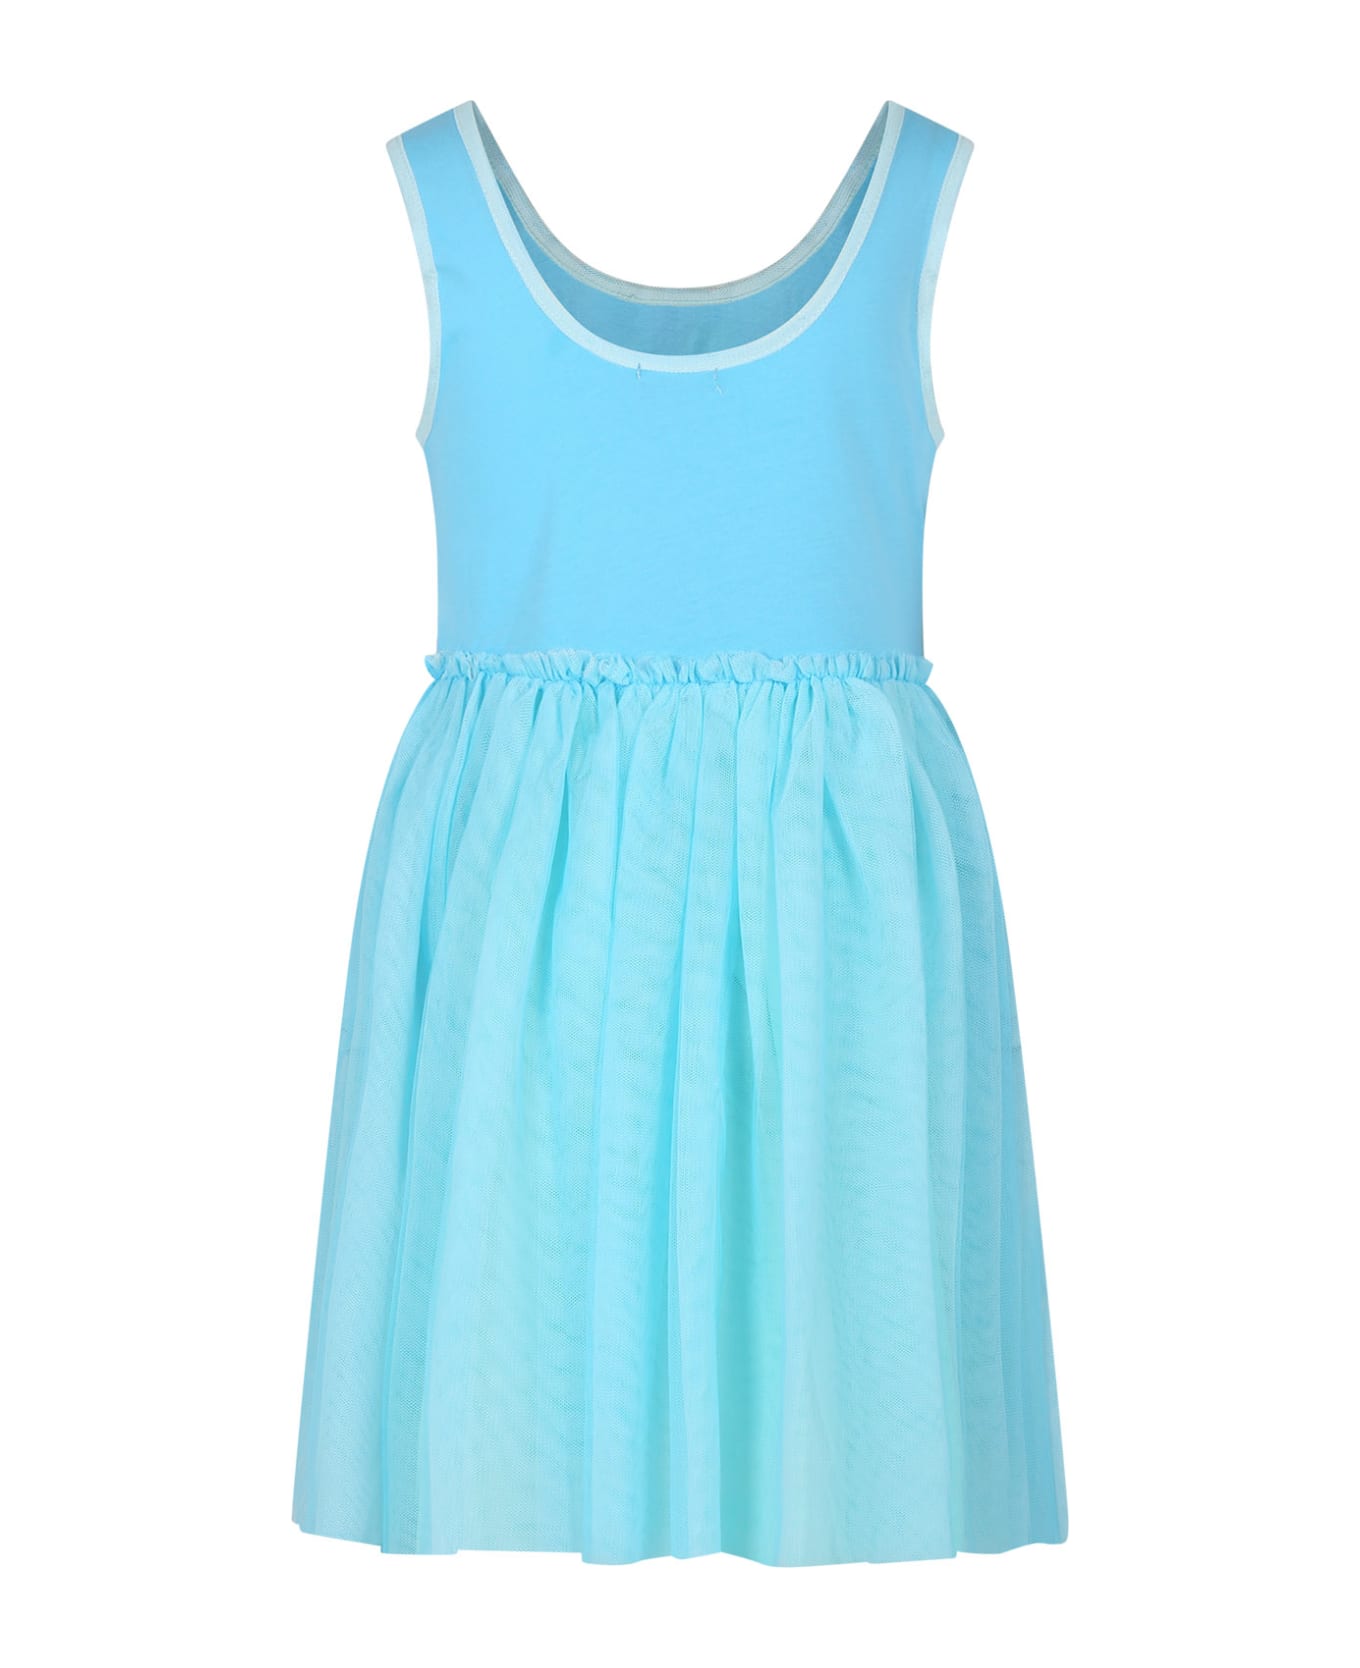 Billieblush Light Blue Dress For Girl With Sequins - Light Blue